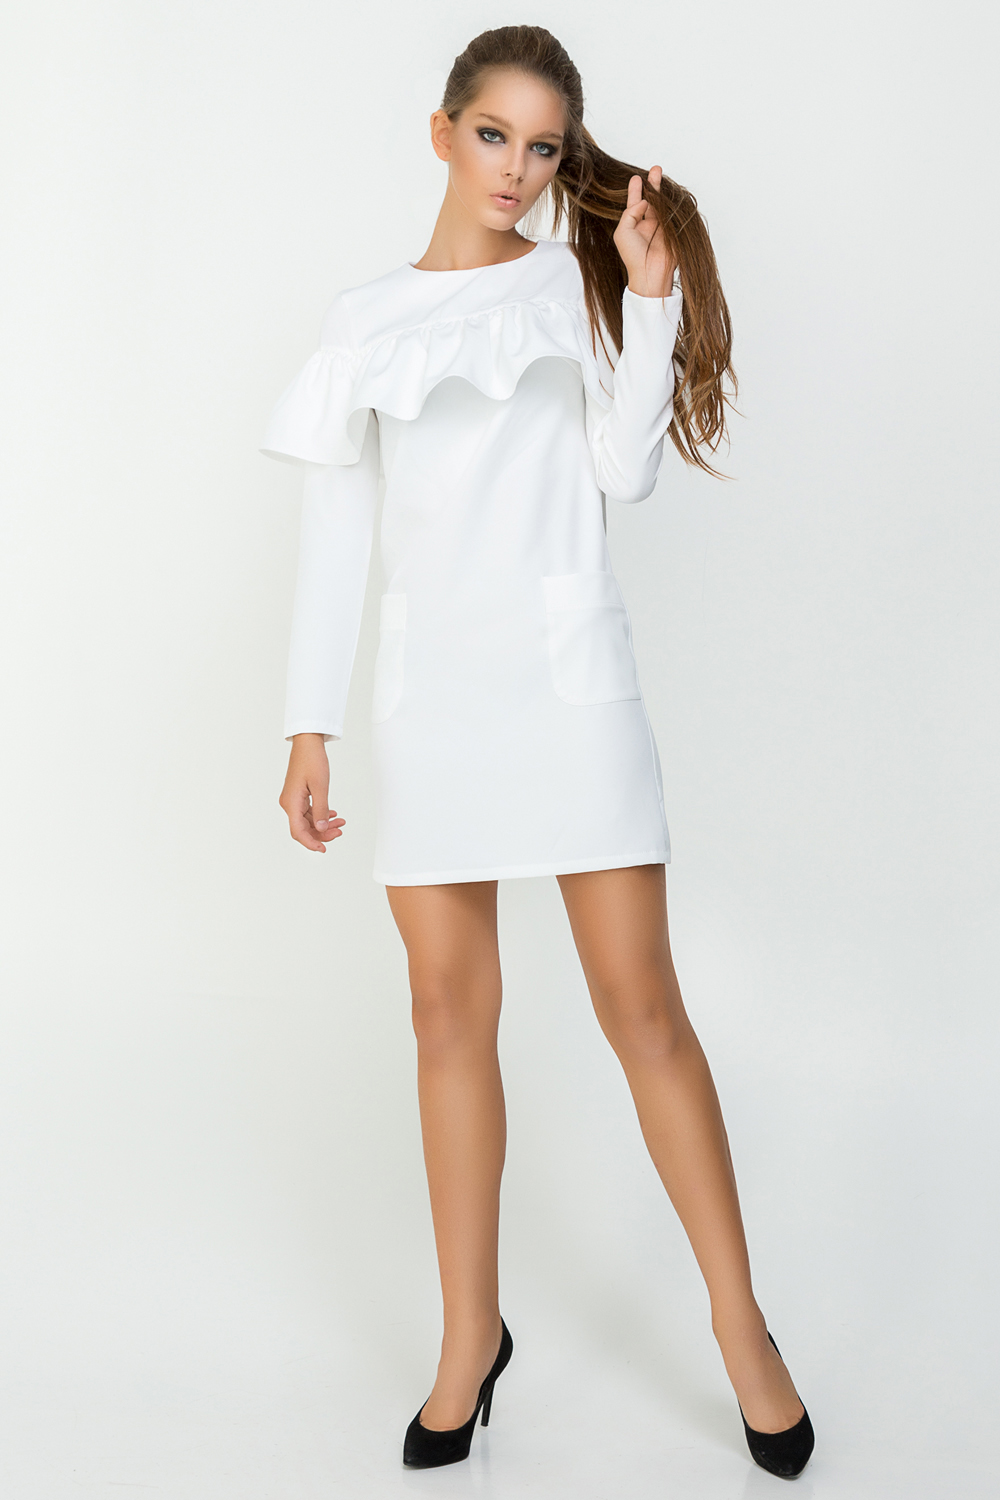 White pelerine dress